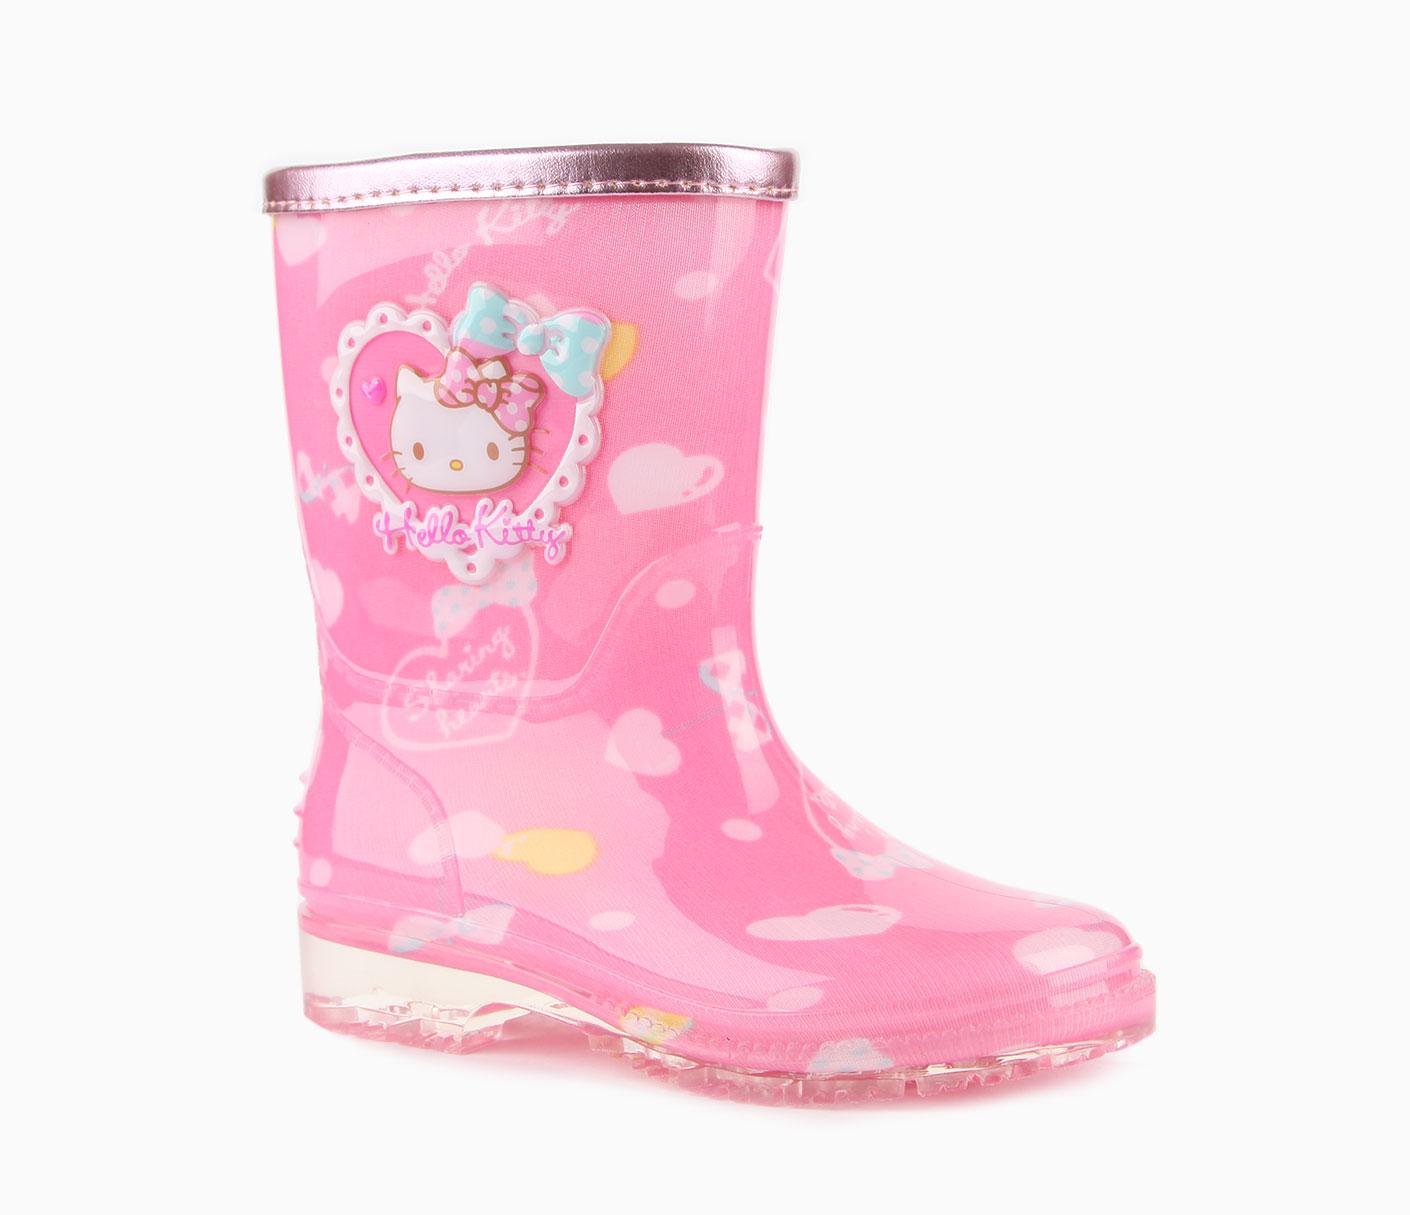 Sanrio Hello Kitty Rain Boots: Sharing Hearts